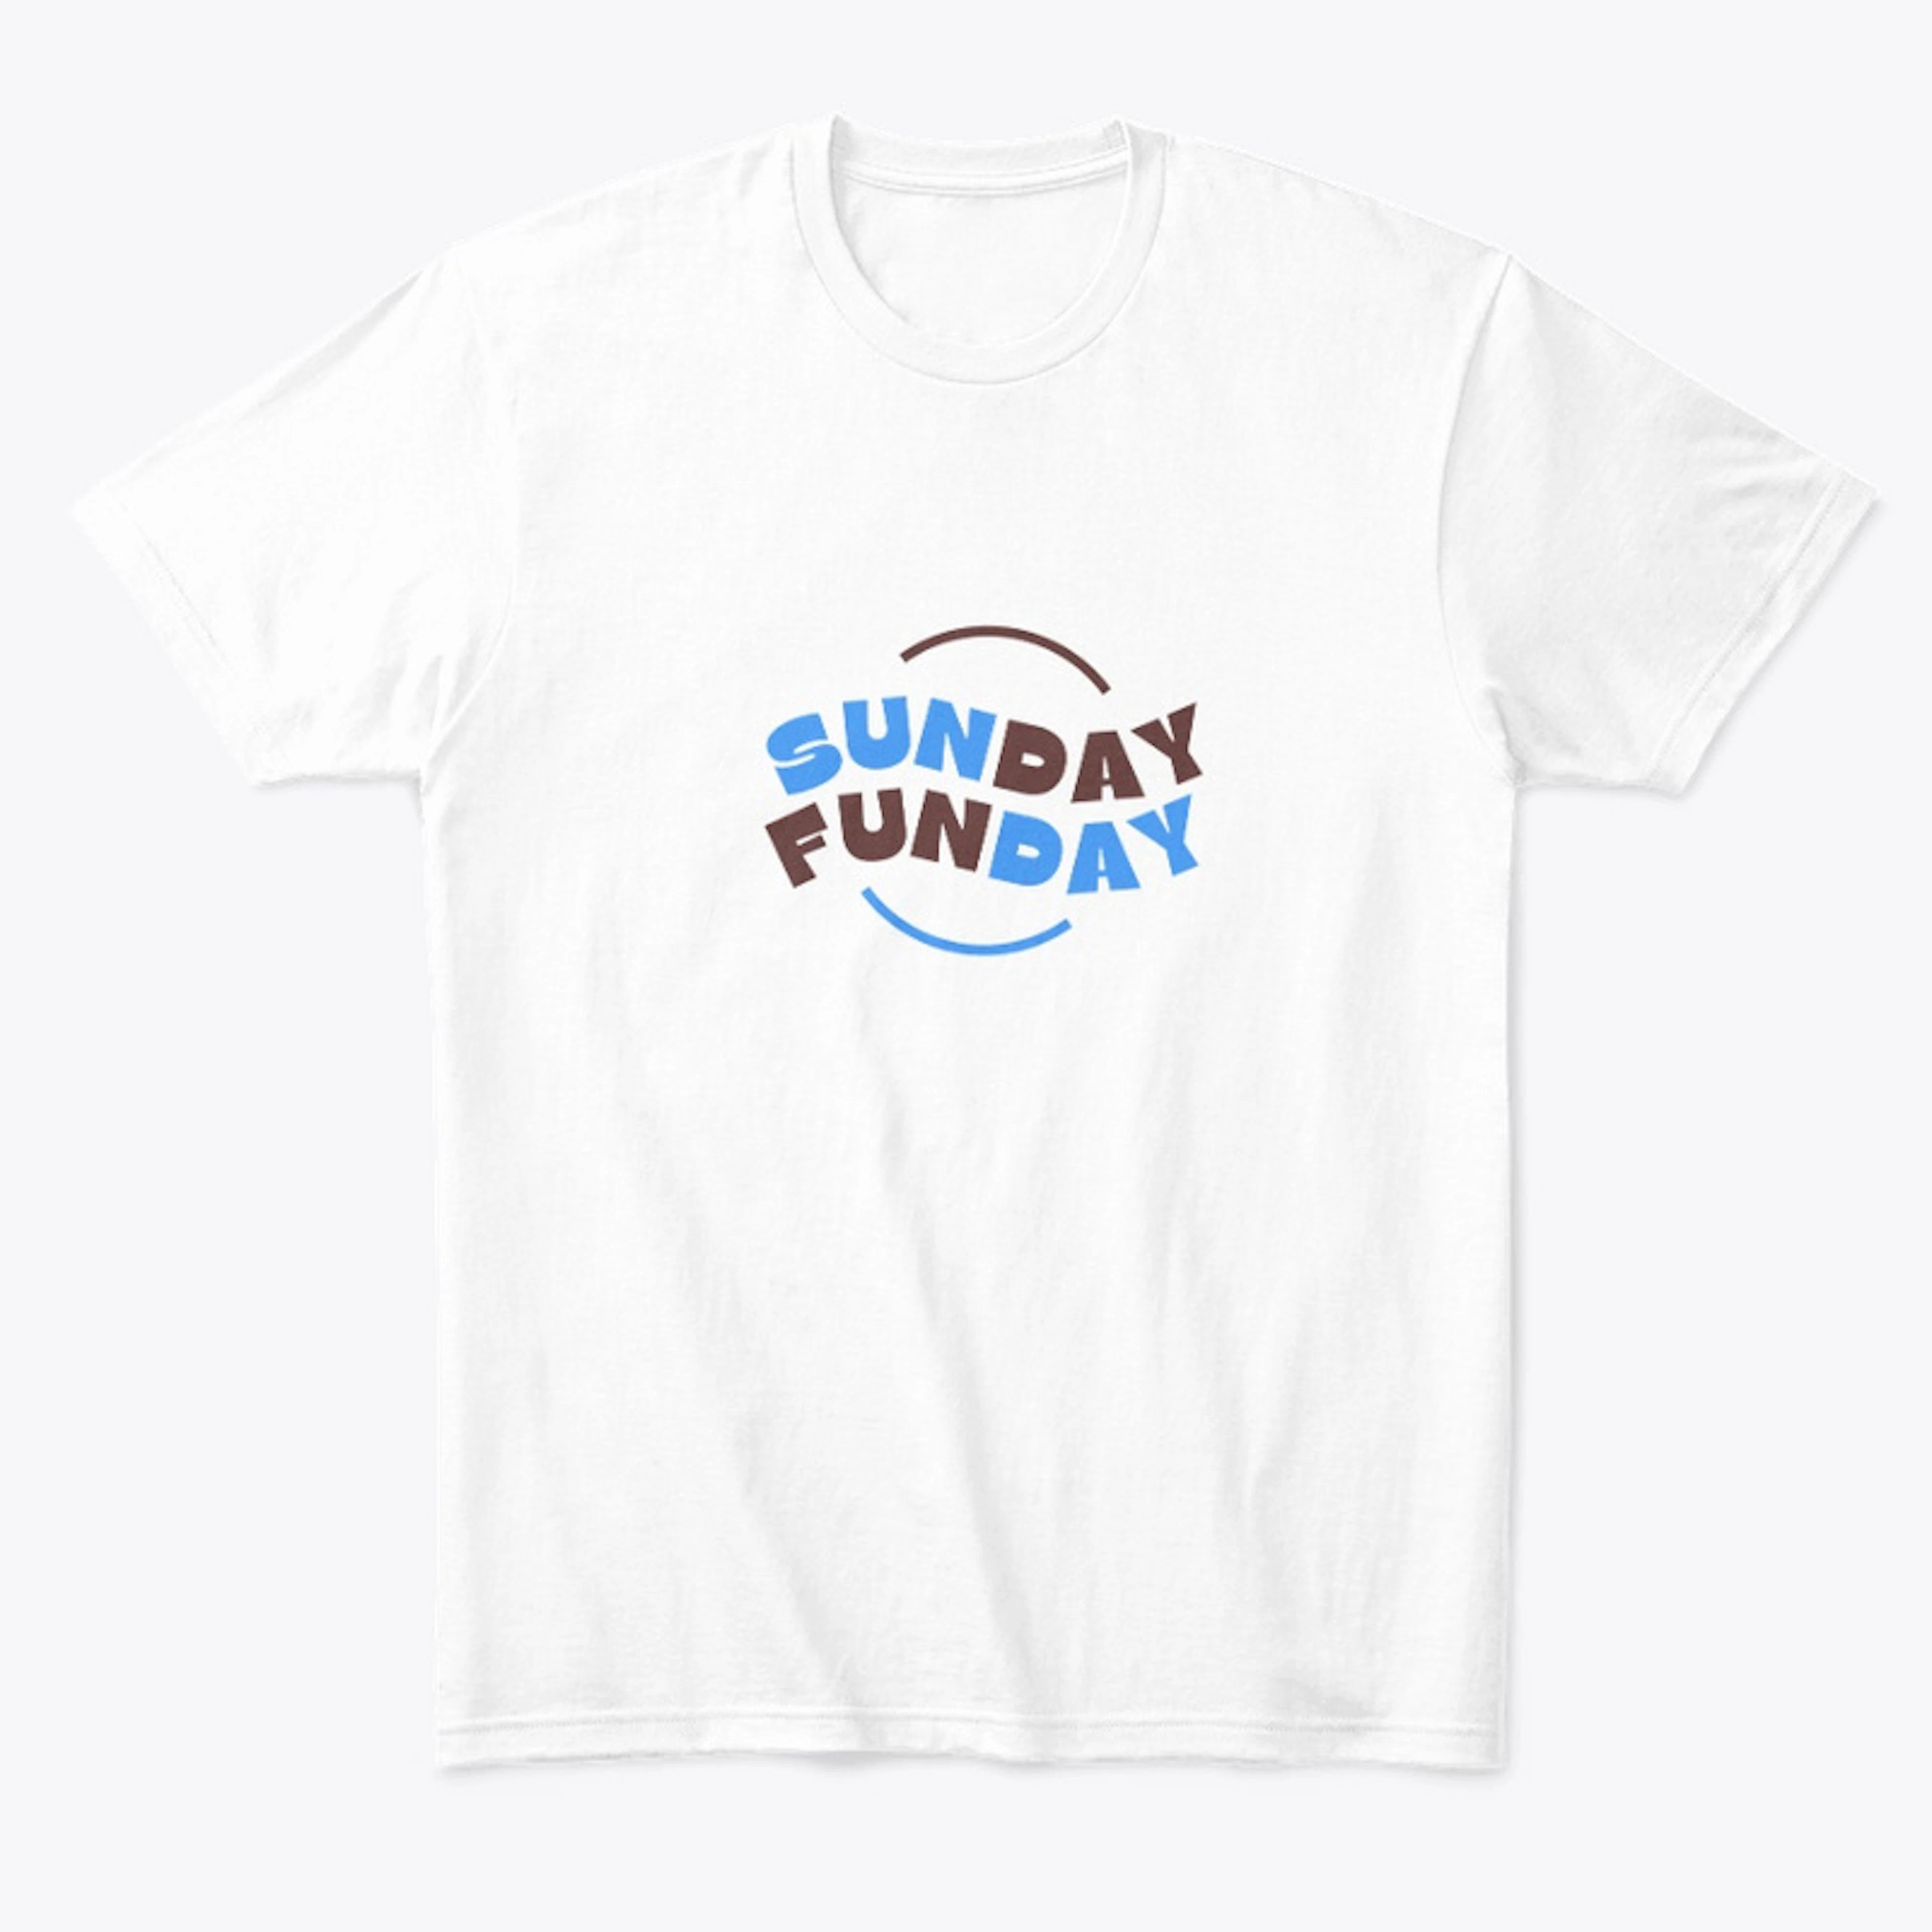 Sunday Funday Design By Switch teez